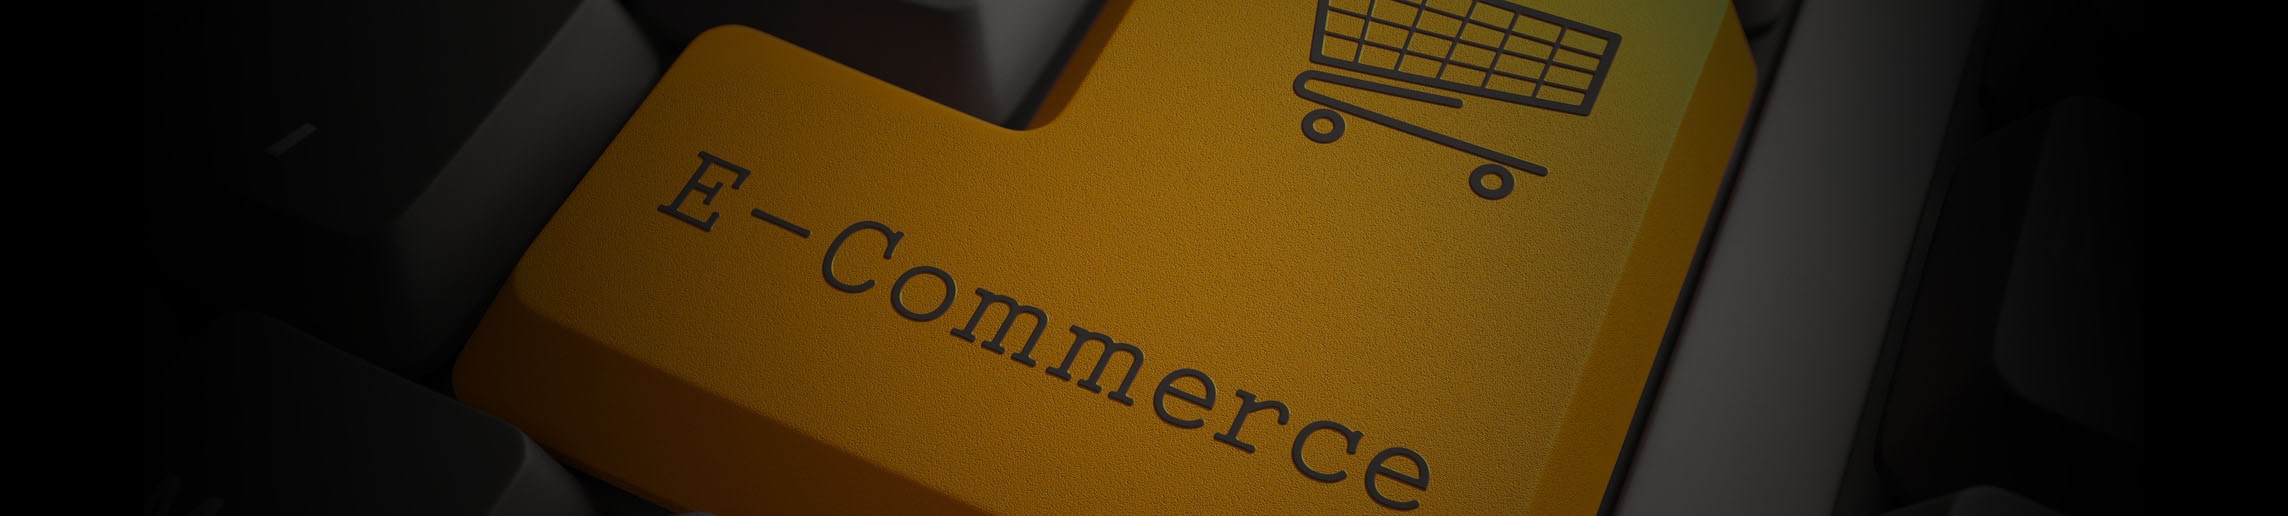 Ecommerce marketing services